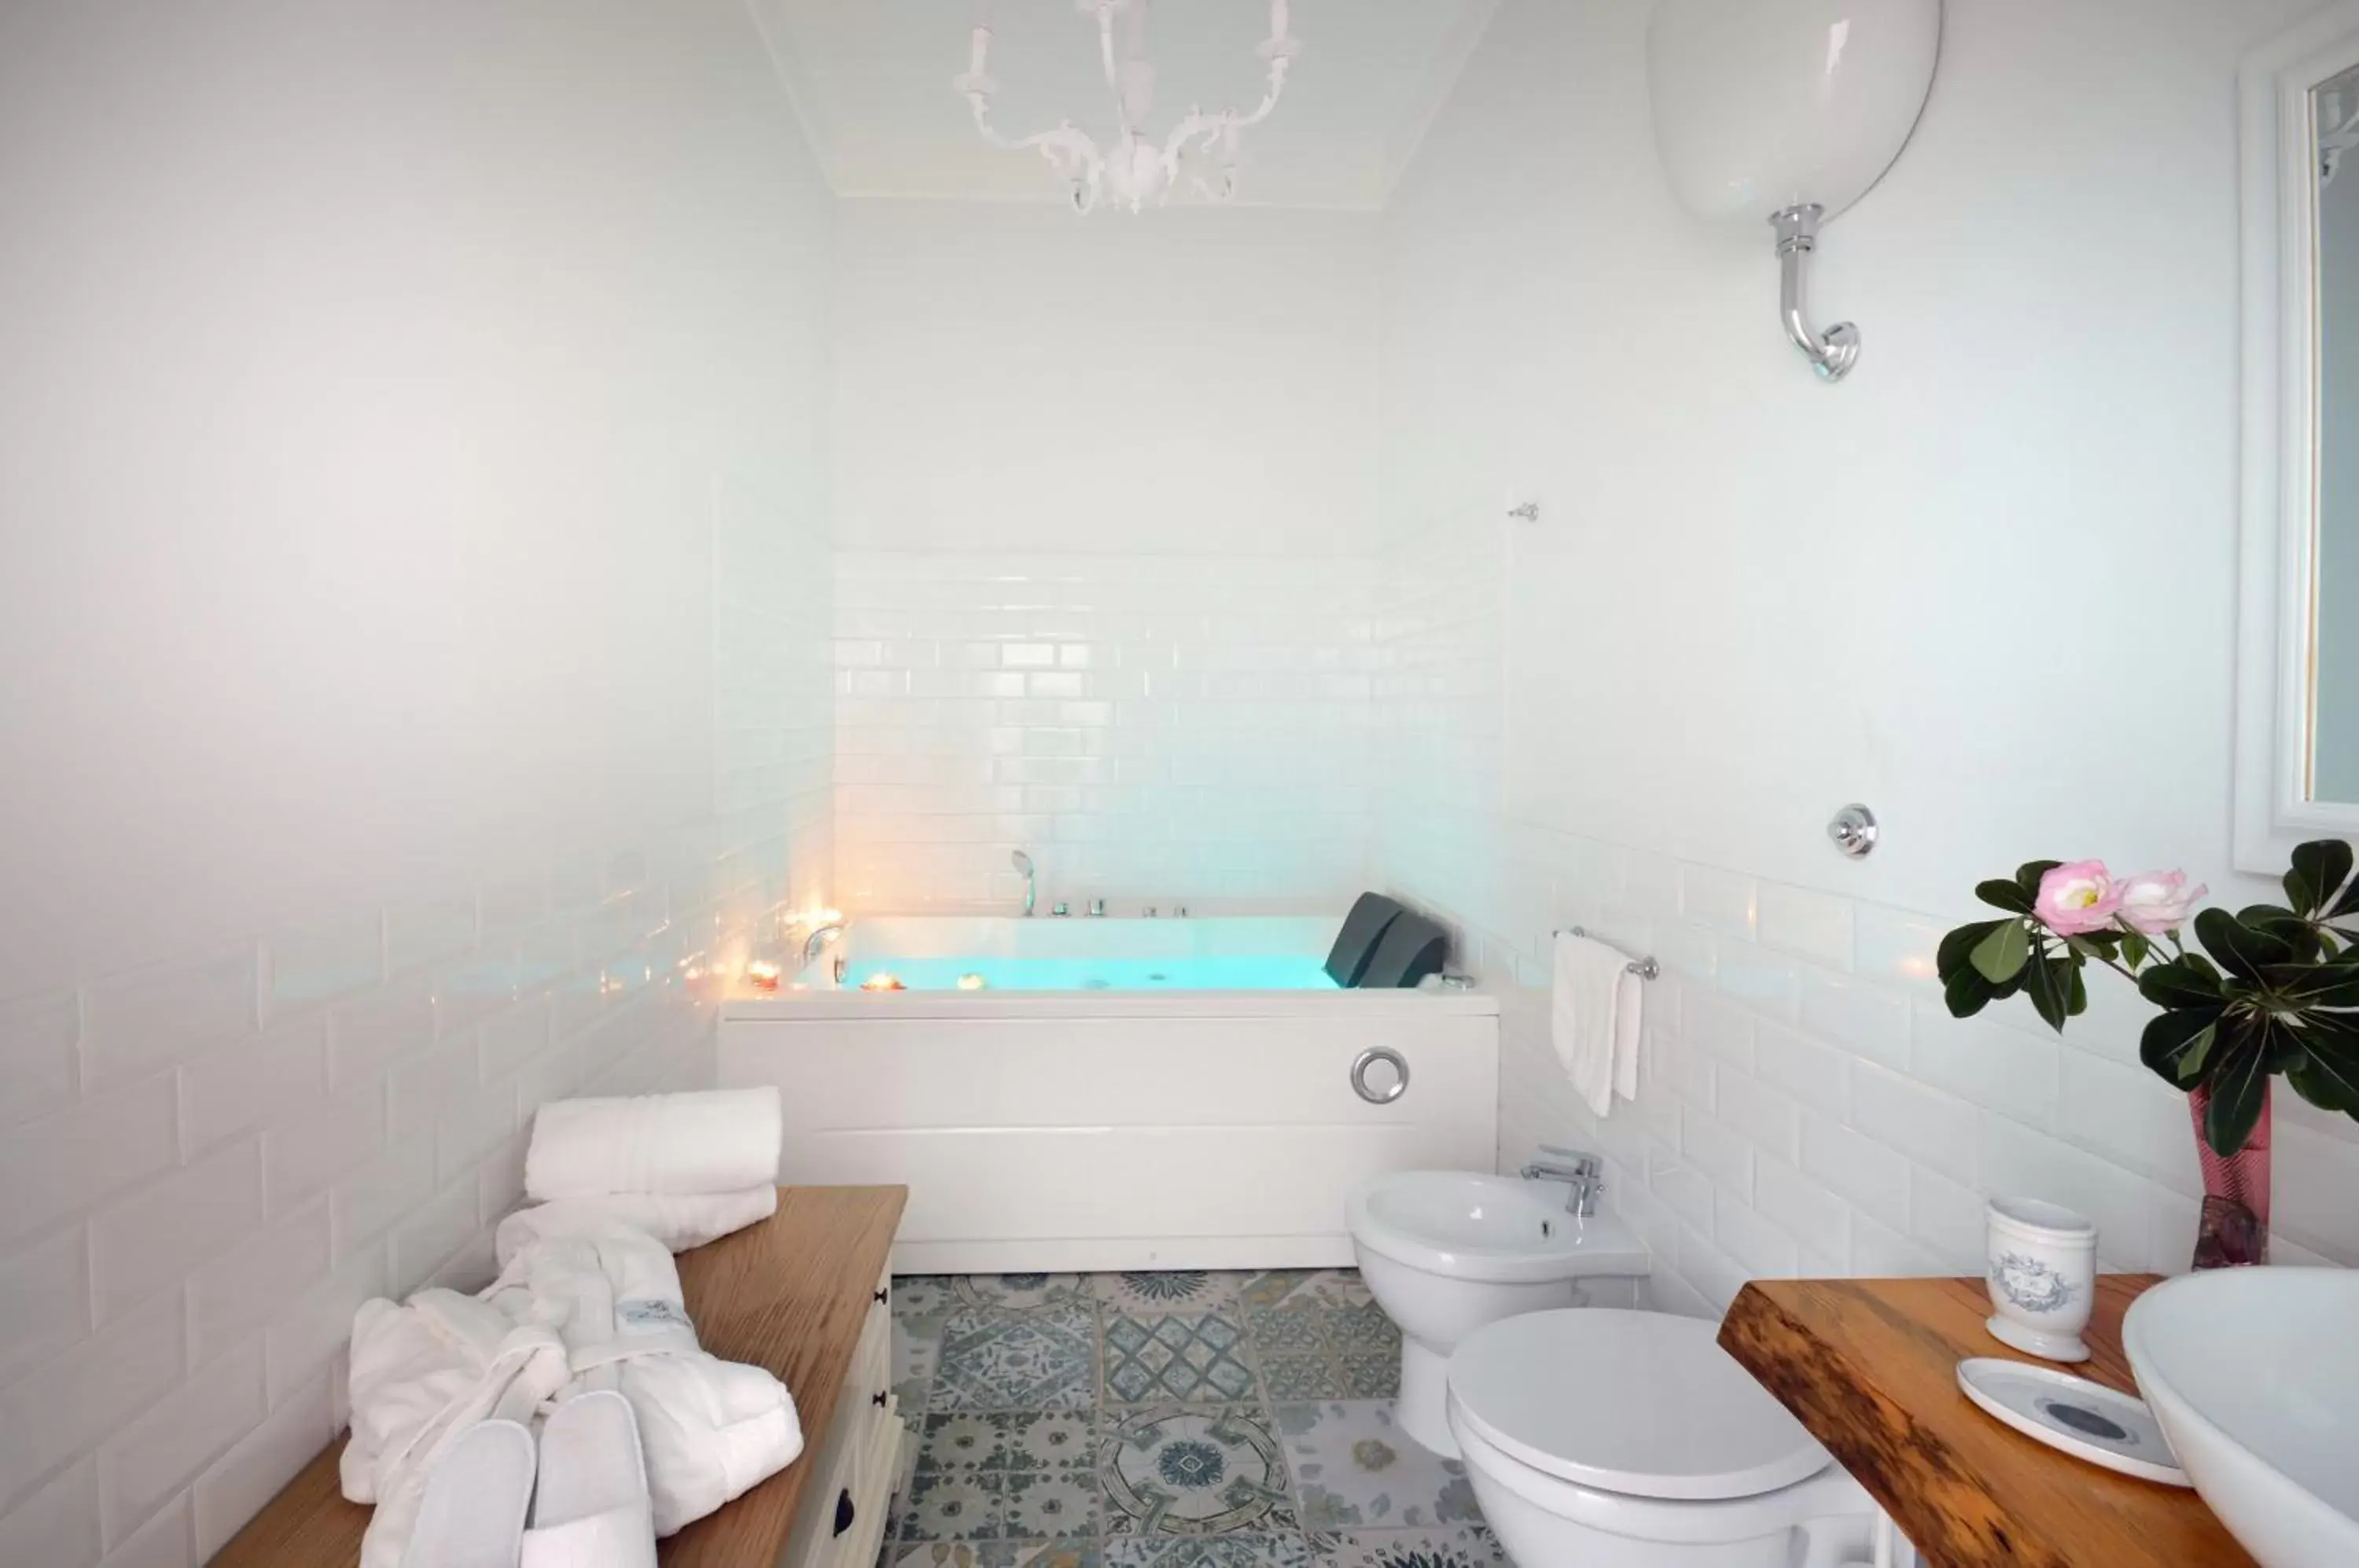 Photo of the whole room, Bathroom in Barbarella Home